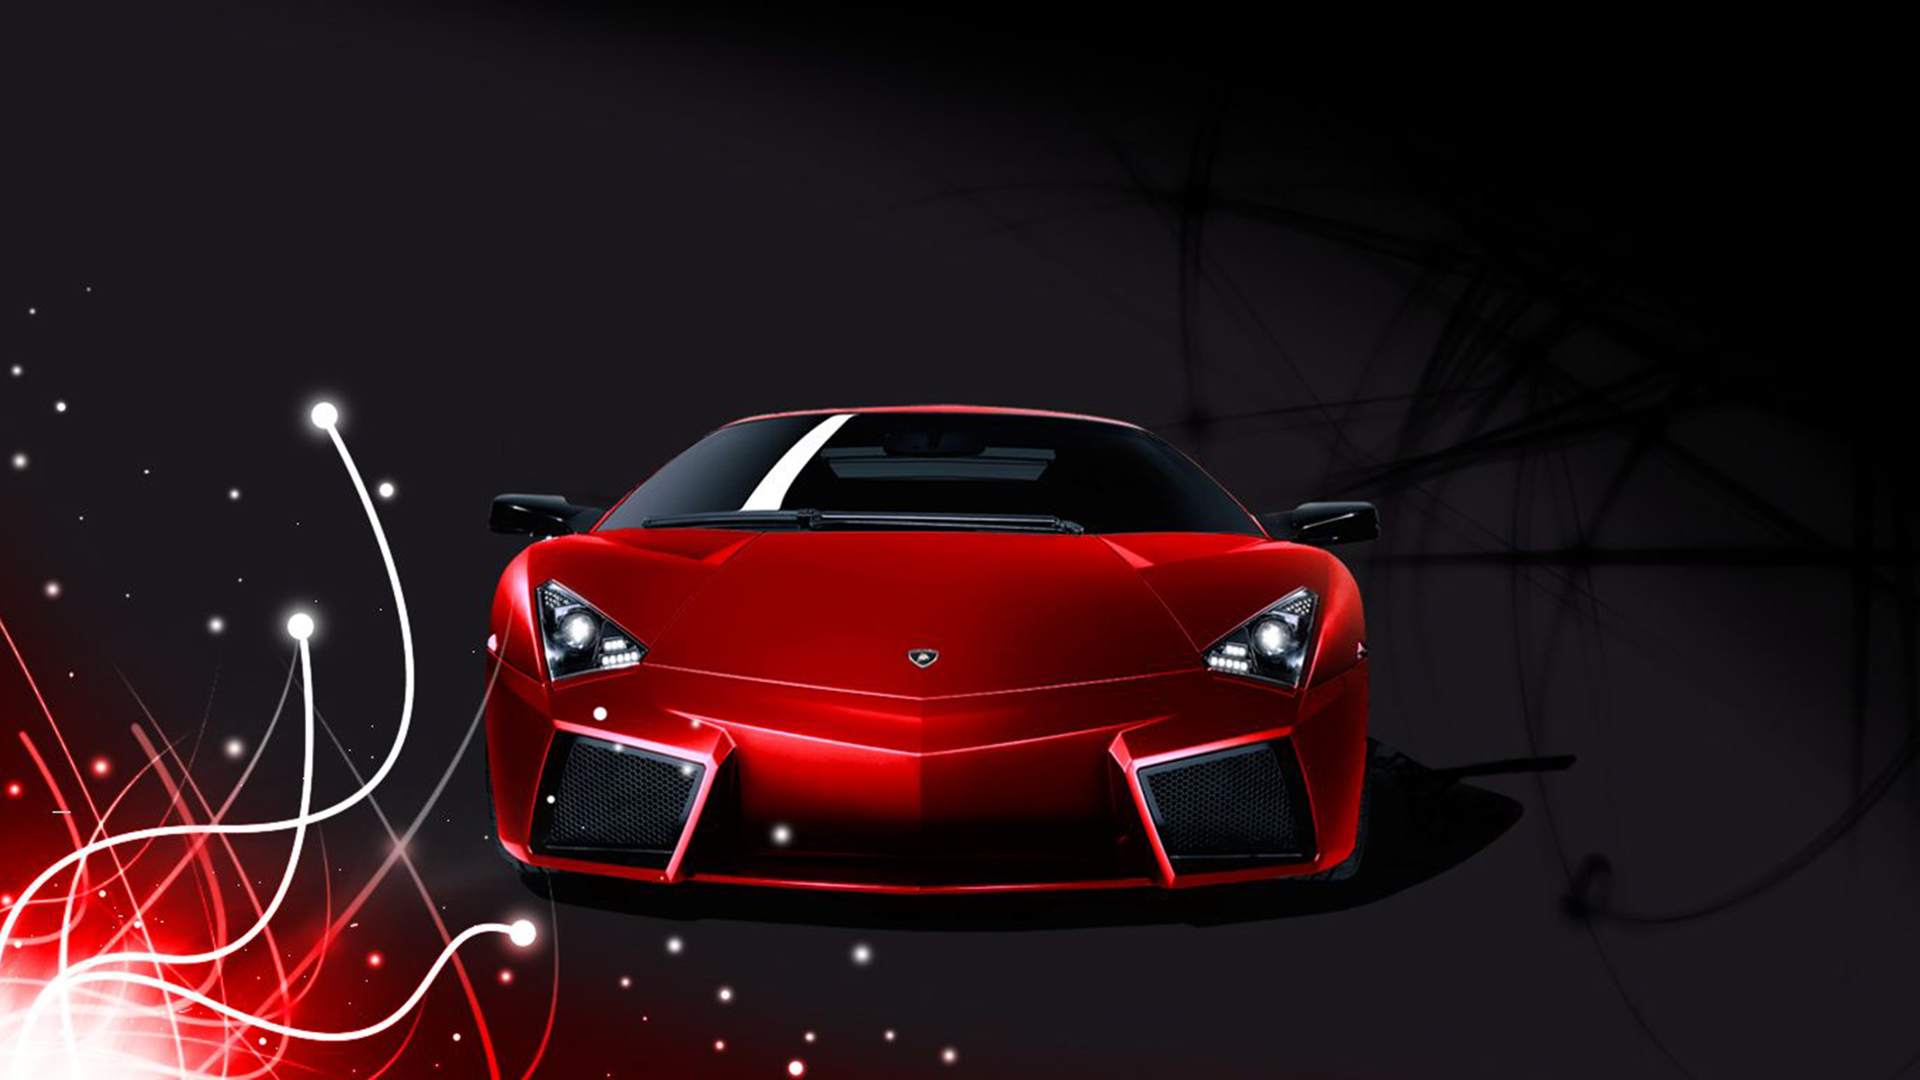 Cool Lamborghini Wallpapers for PC Free Download 